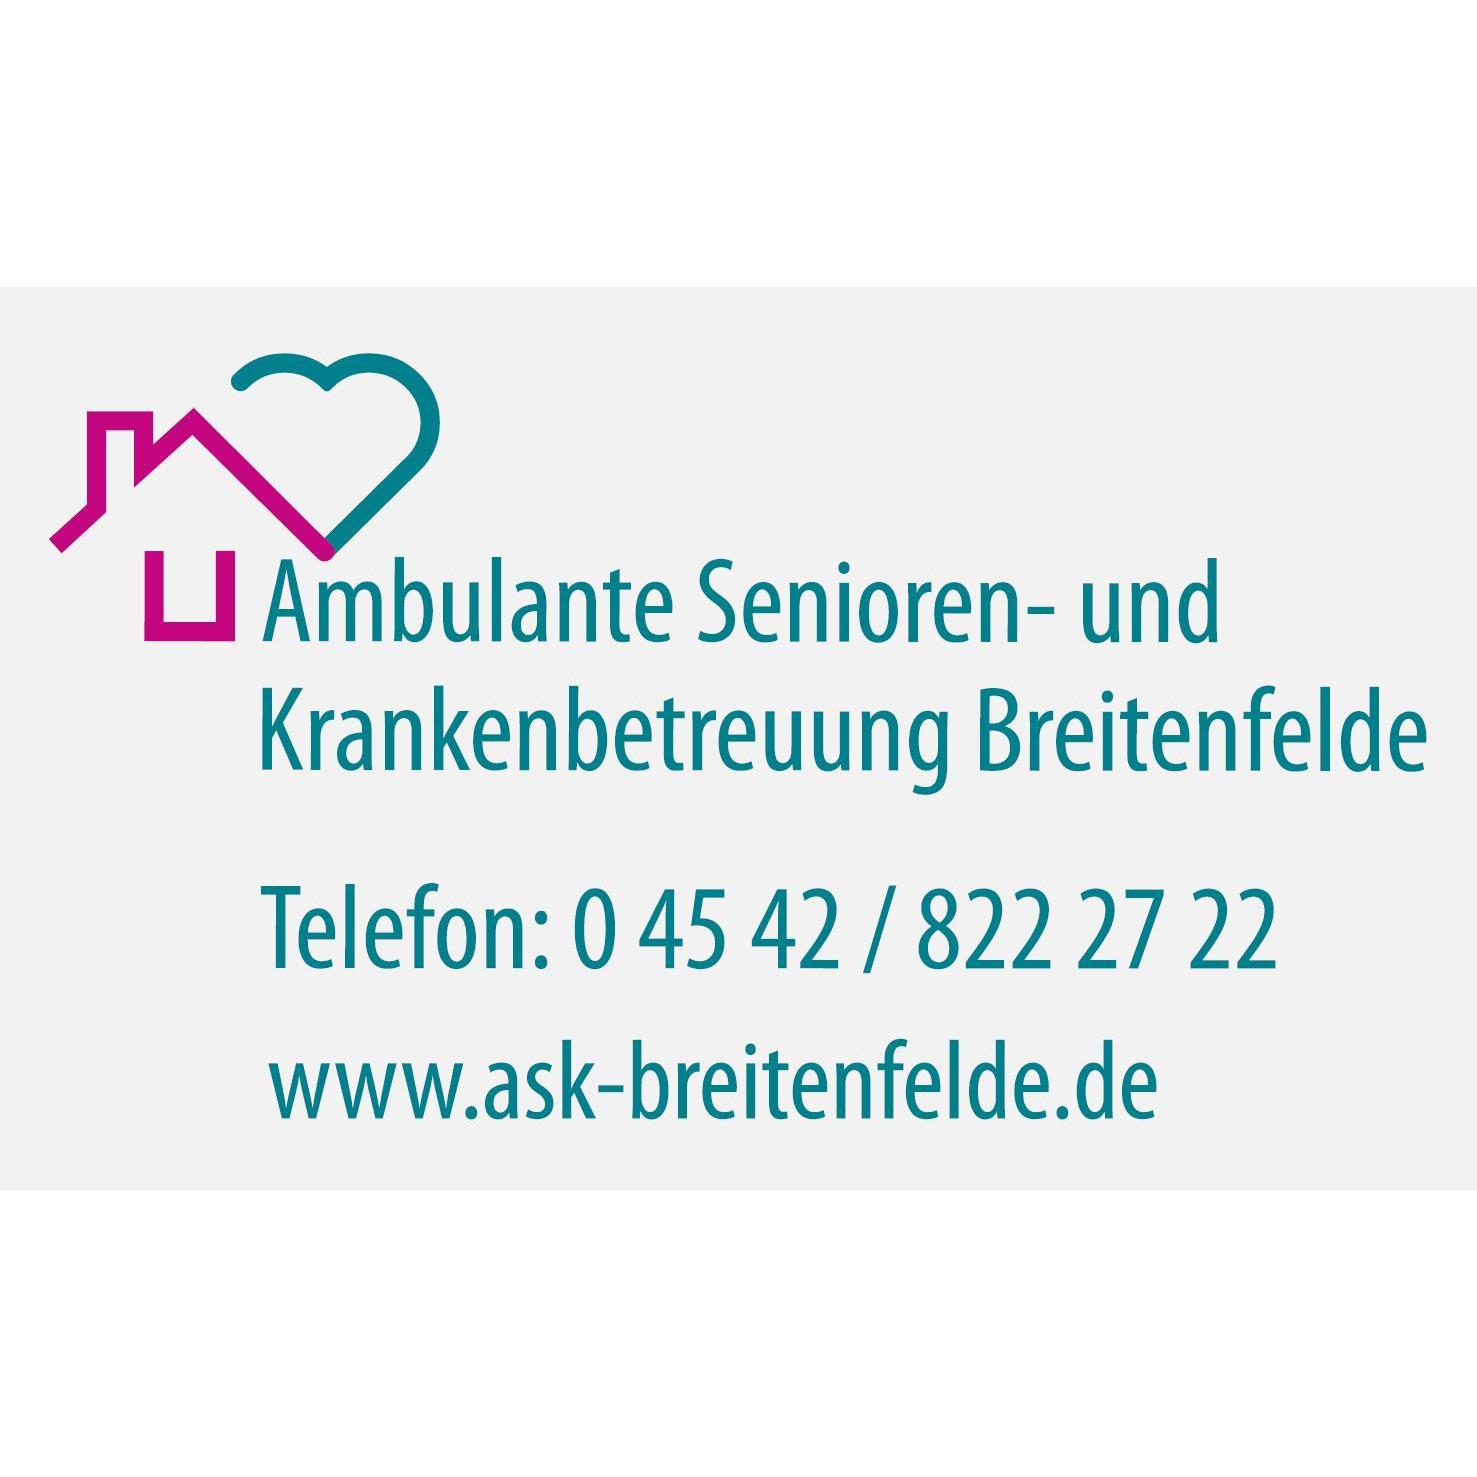 Ambulante Senioren- und Krankenbetreuung Breitenfelde  